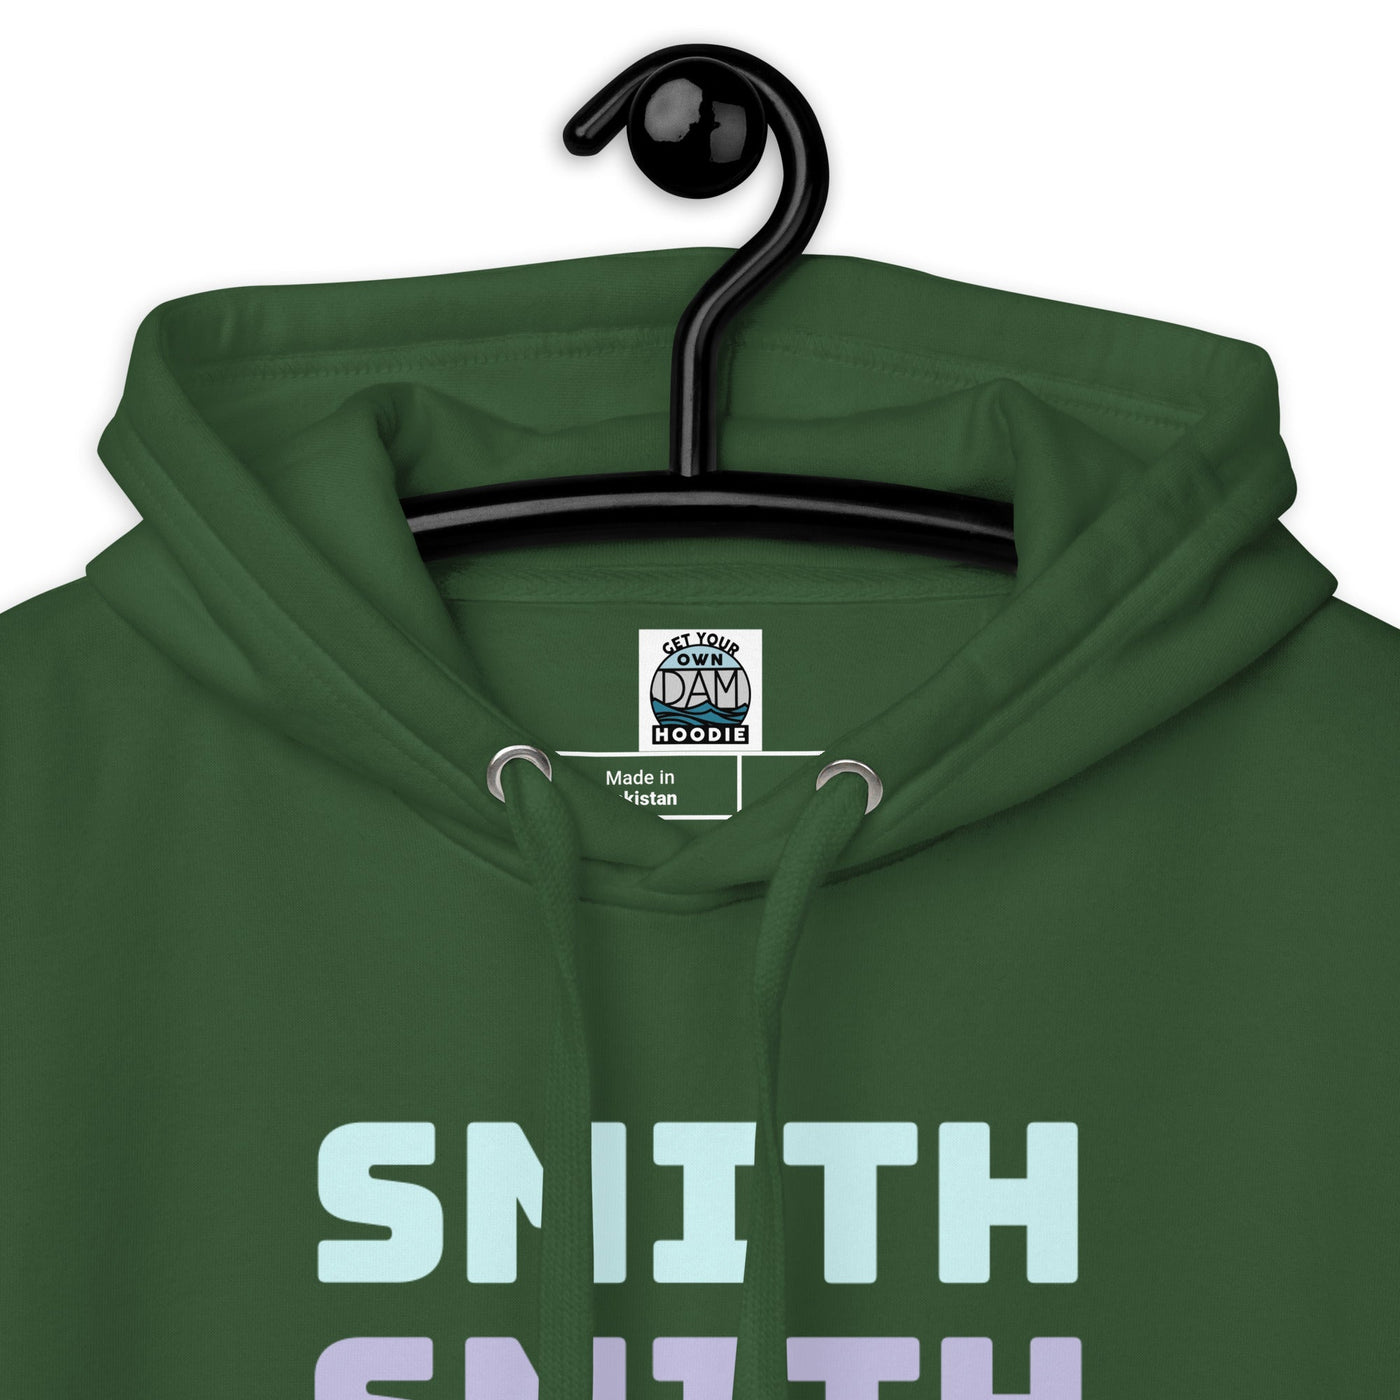 Smith Lake Premium Hoodie - Ezra's Clothing